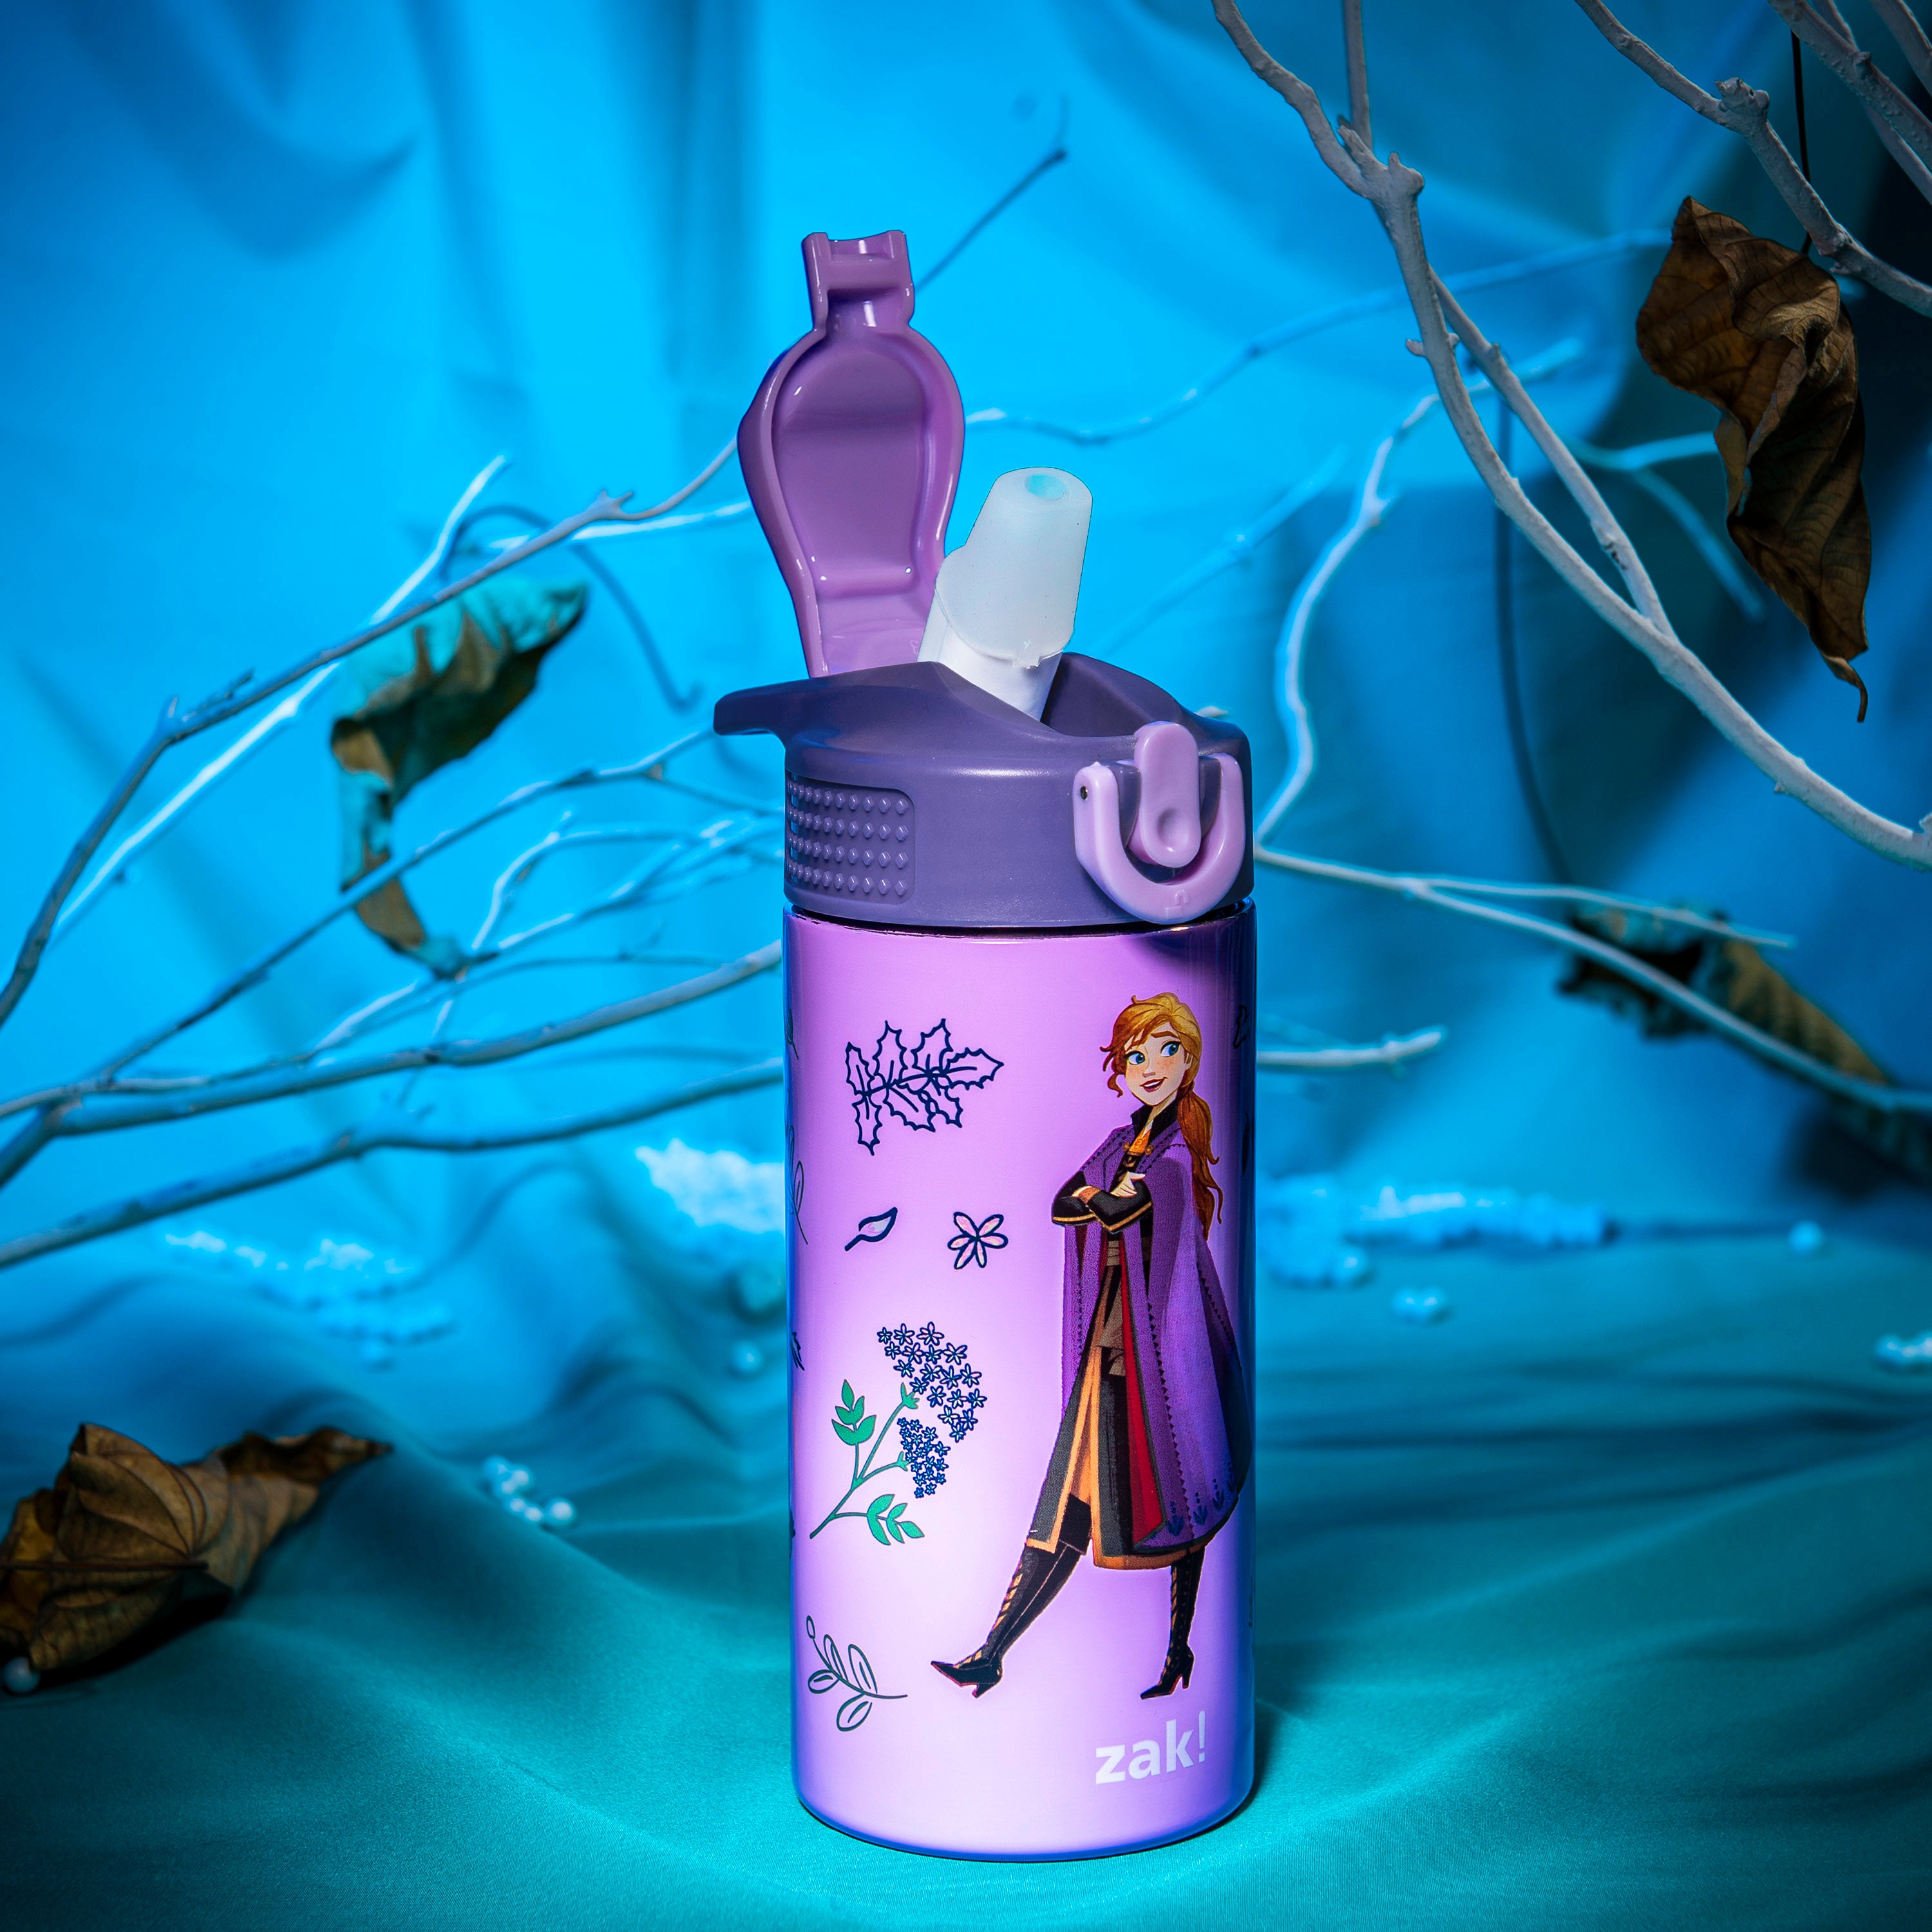 Water Bottle Blue Lilo & Stitch Zak! Disney Leak Proof Insulated